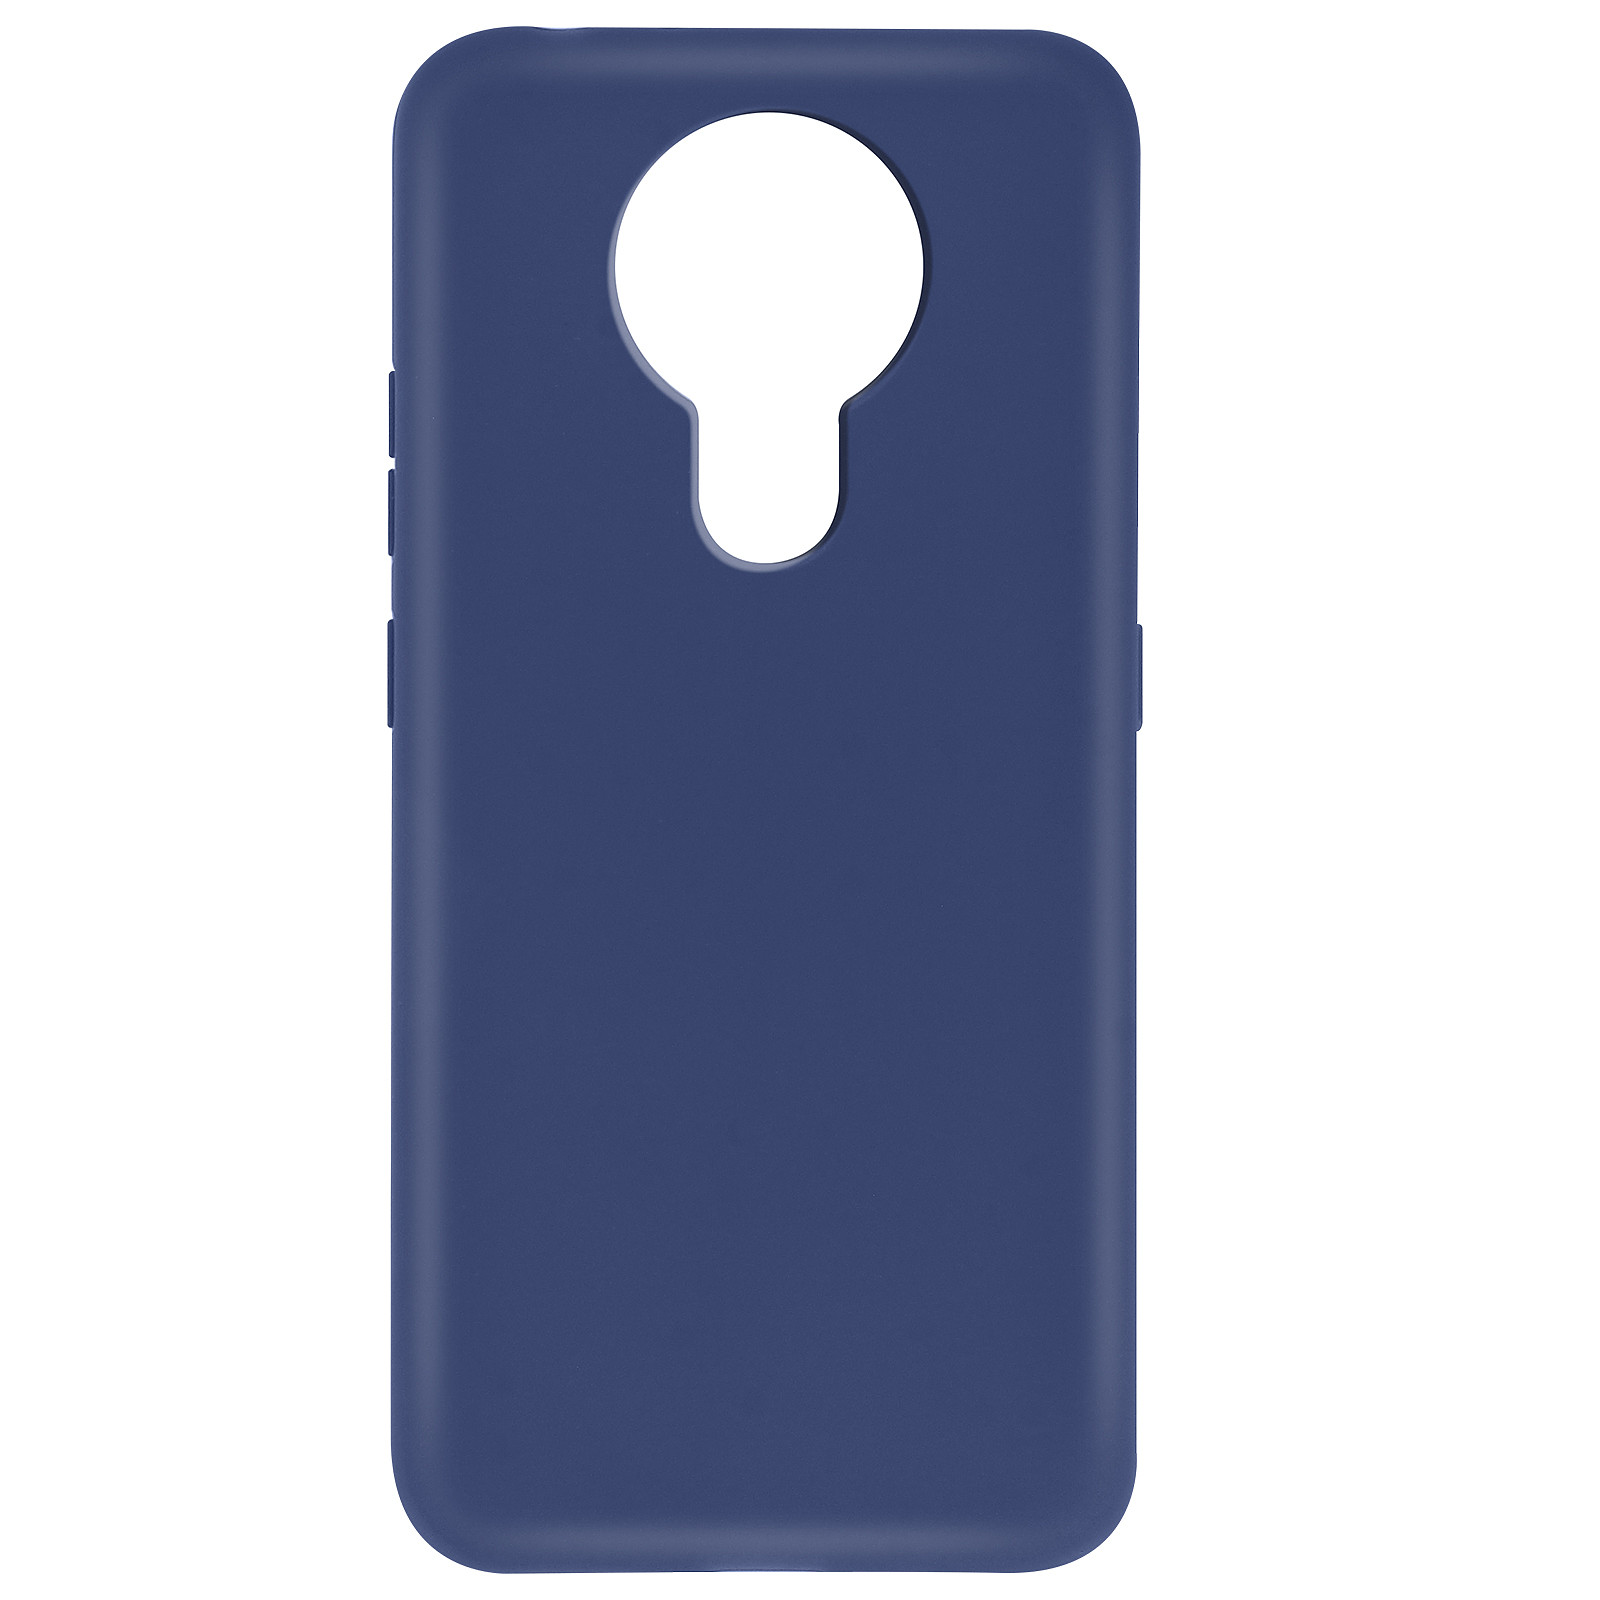 Avizar Coque pour Nokia 3.4 Flexible Antichoc Finition Mat Anti-traces Bleu - Coque telephone Avizar